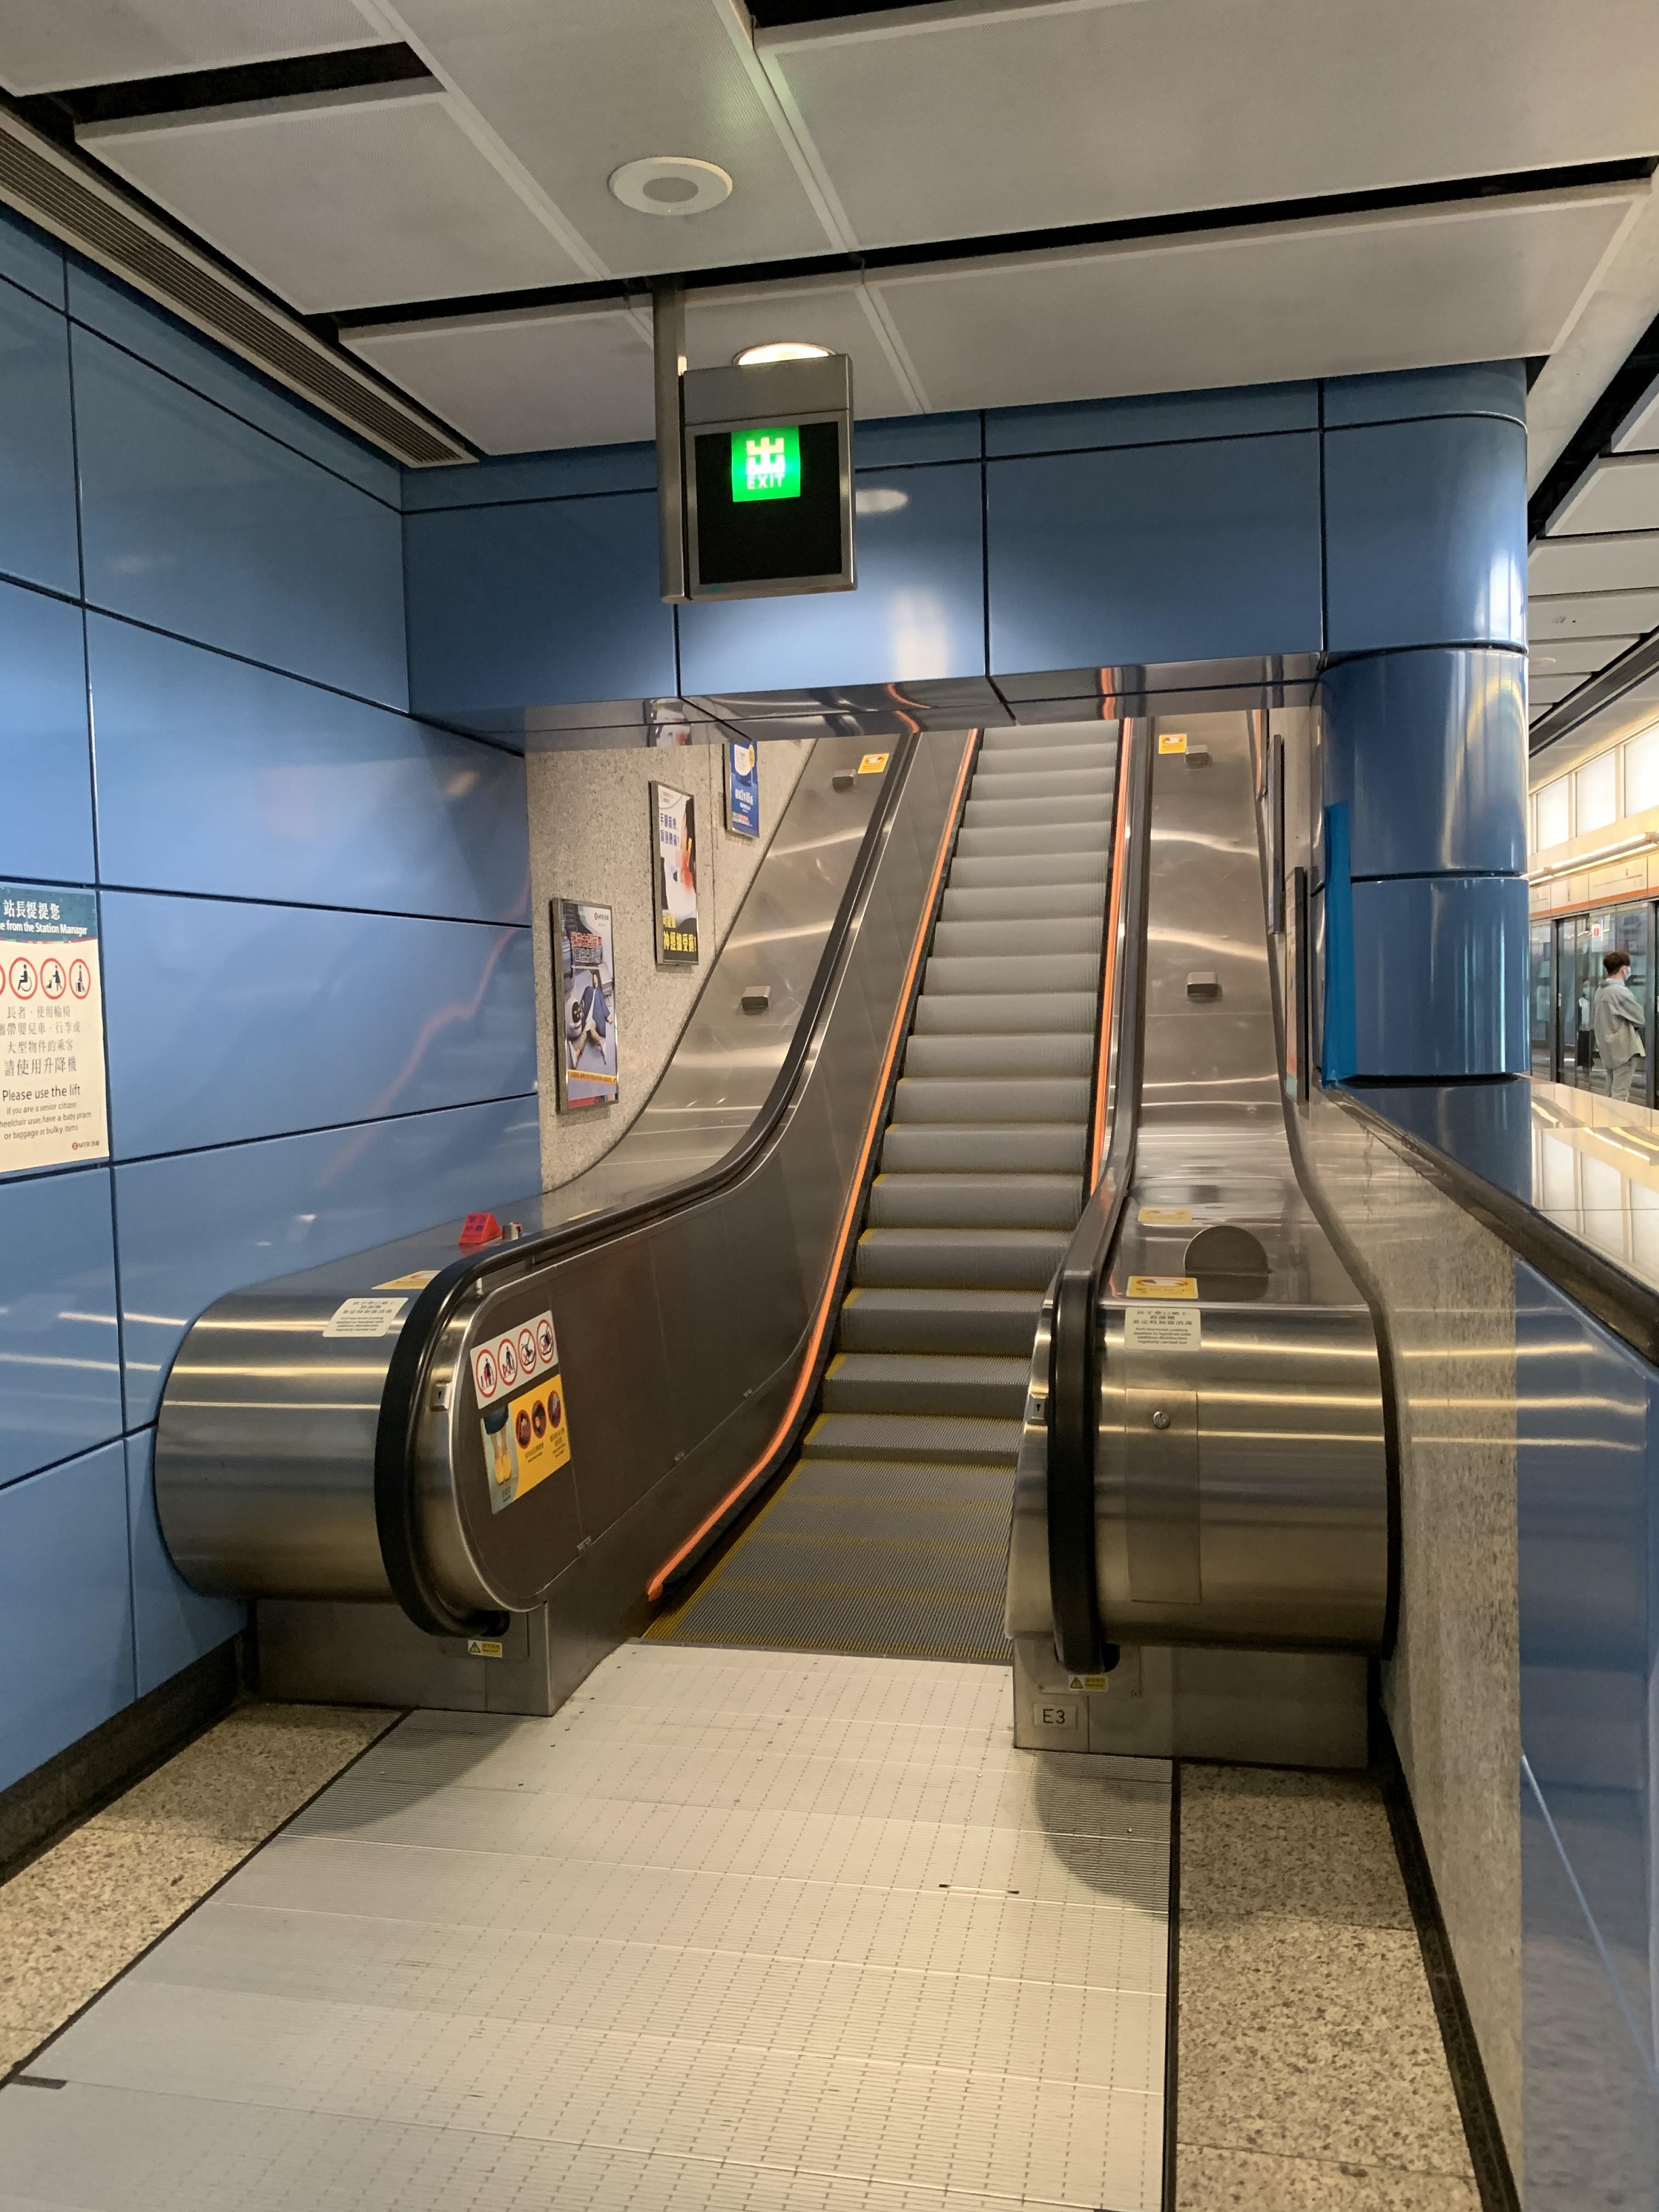 Refurbished escalator in Olympic Station 